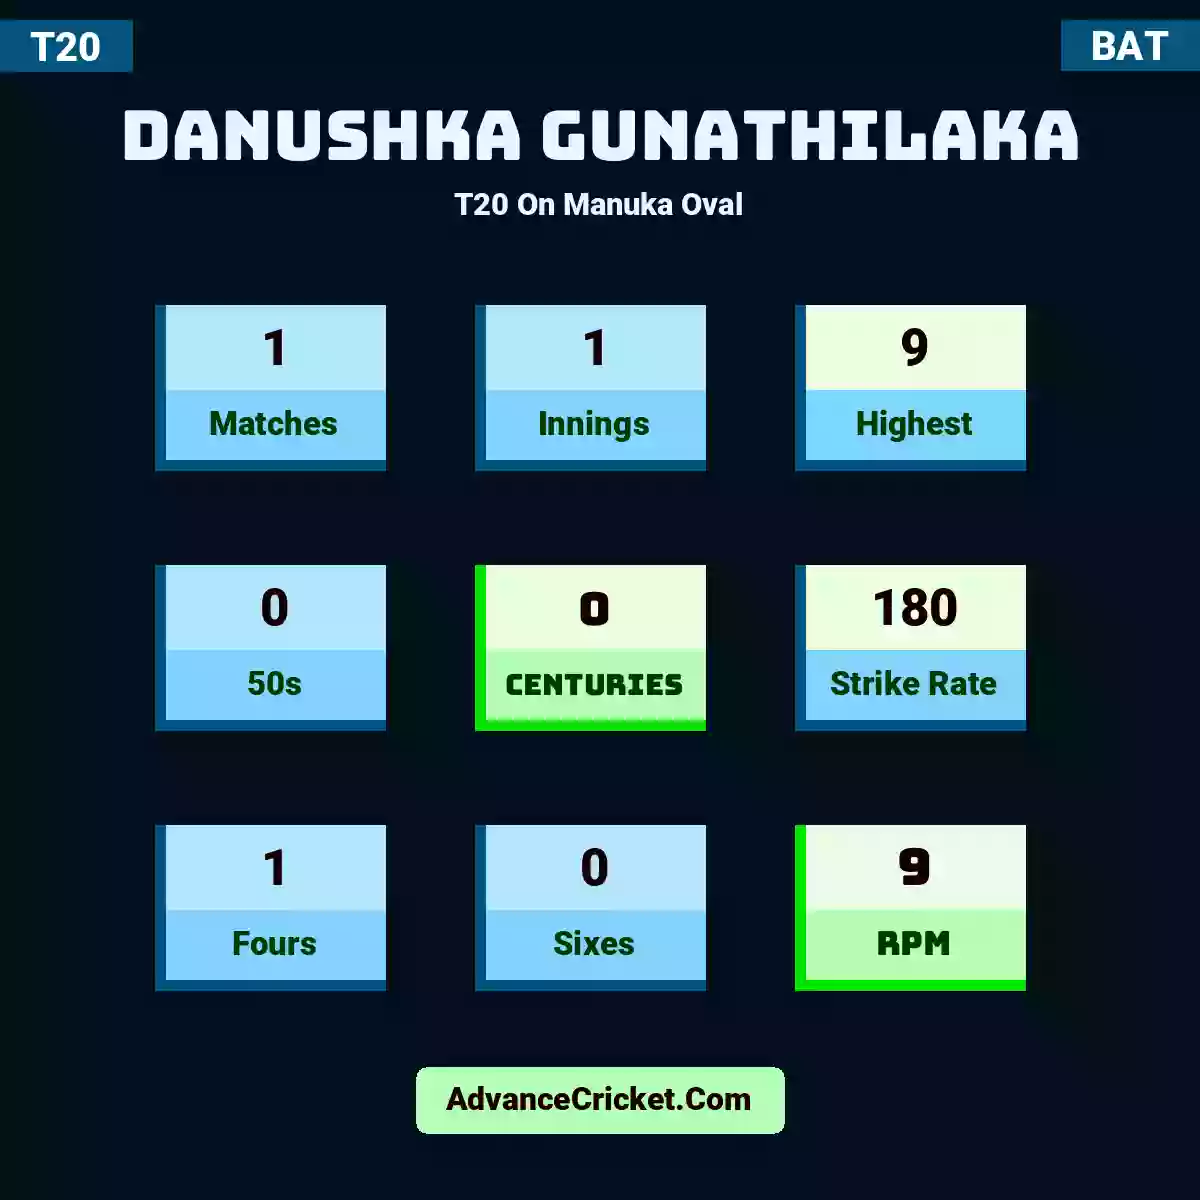 Danushka Gunathilaka T20  On Manuka Oval, Danushka Gunathilaka played 1 matches, scored 9 runs as highest, 0 half-centuries, and 0 centuries, with a strike rate of 180. D.Gunathilaka hit 1 fours and 0 sixes, with an RPM of 9.